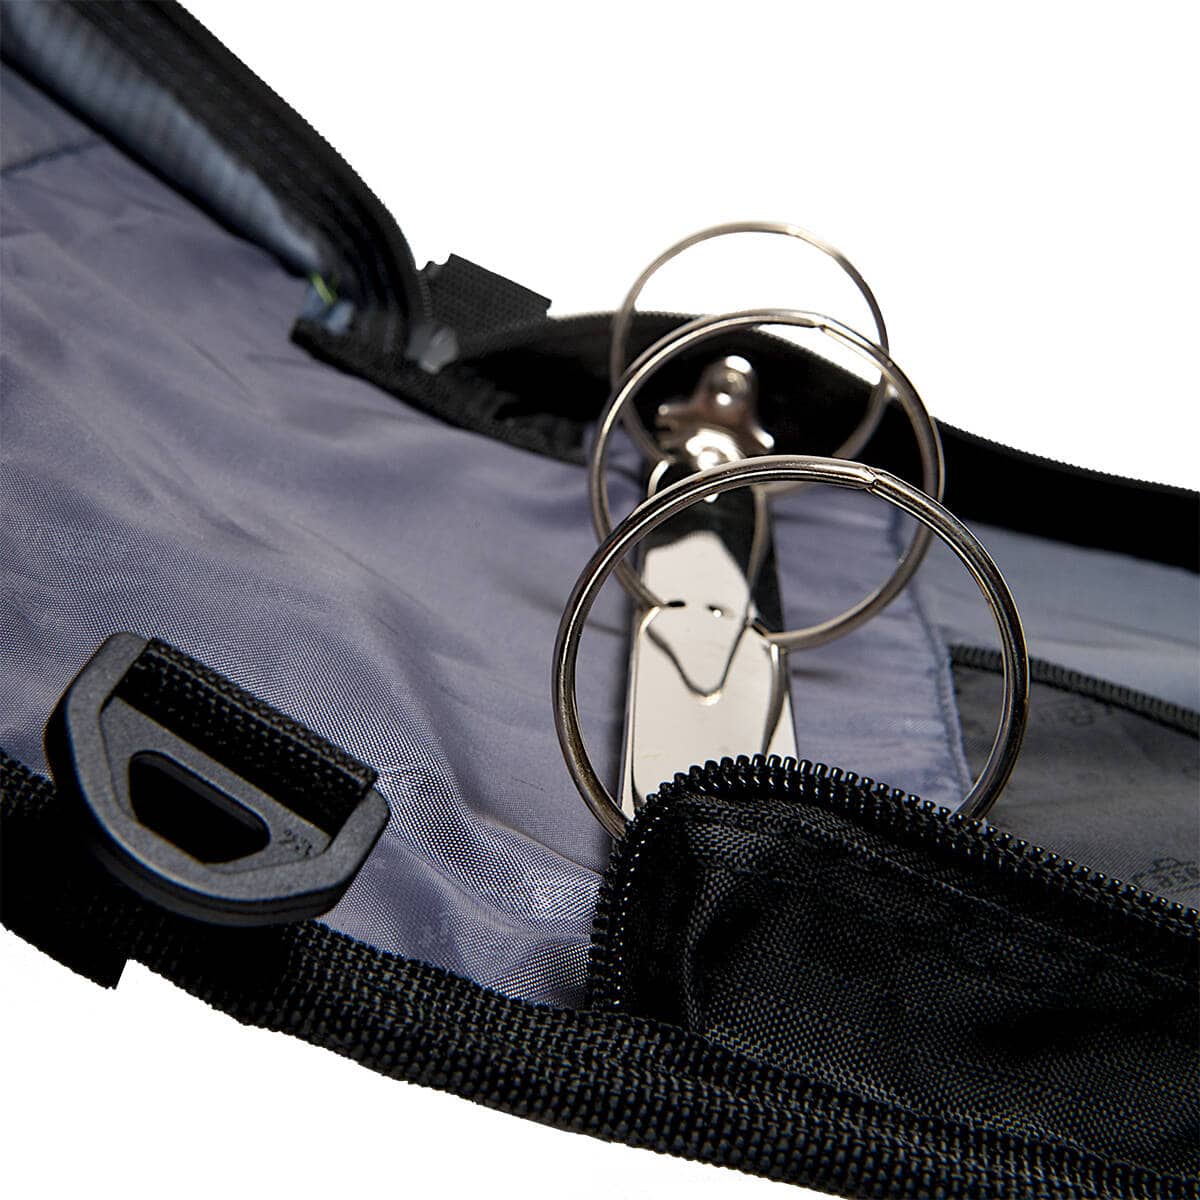 Case-it “The Flip Top” 3-Ring Zipper Binder 2 Capacity Pink Purple carry  handle